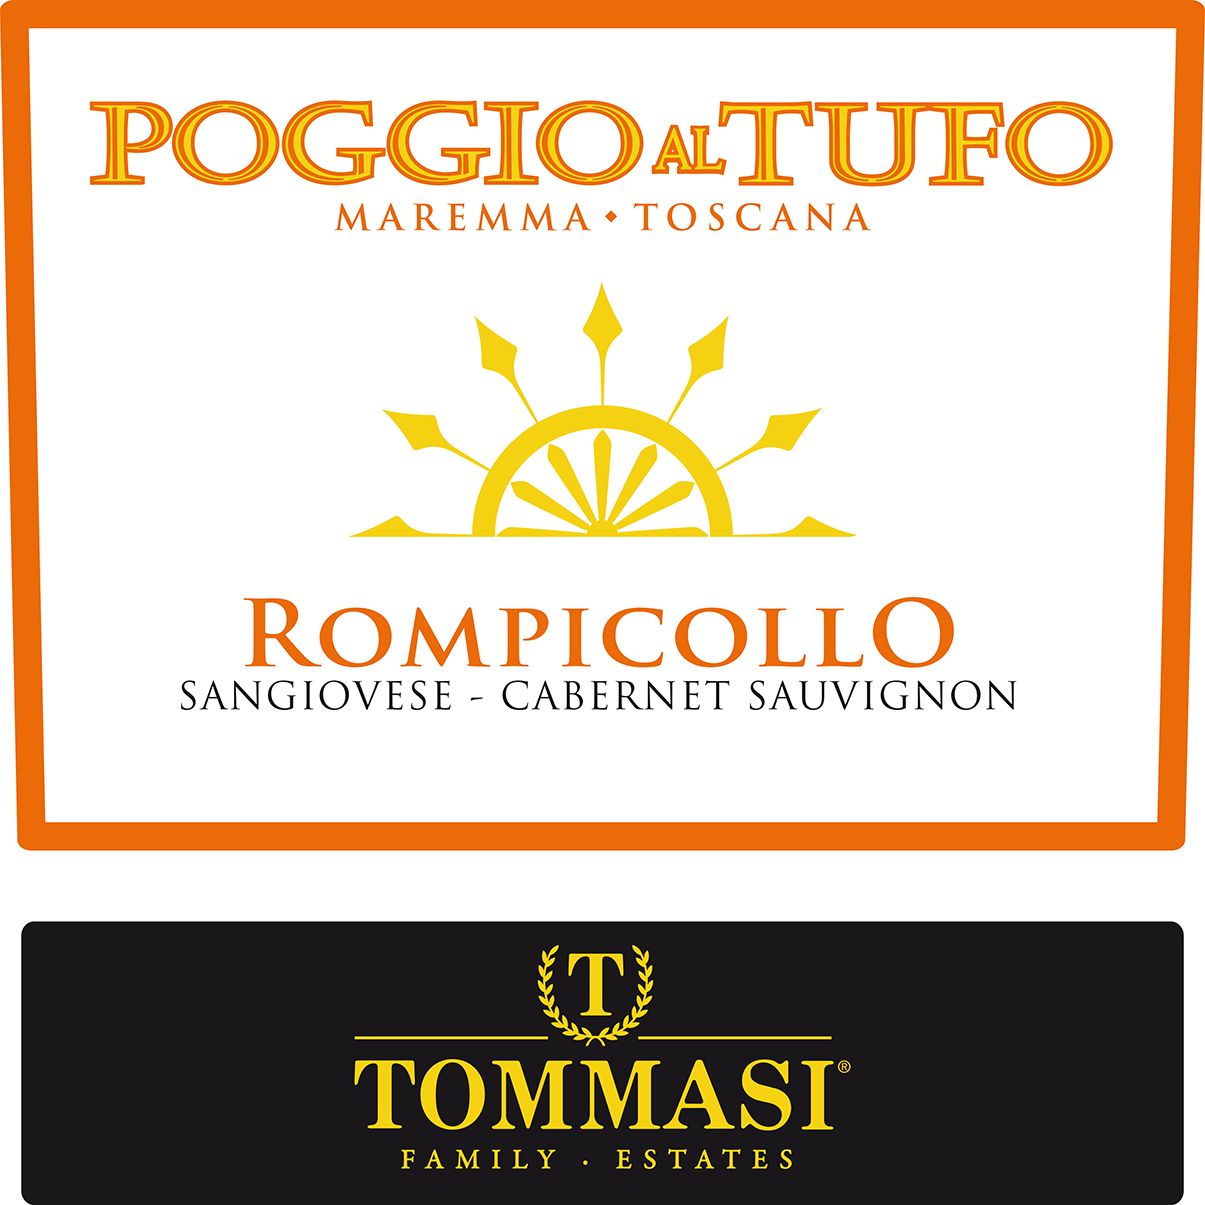 Tommasi - Poggio Al Tufo - Vigneto Rompicollo label